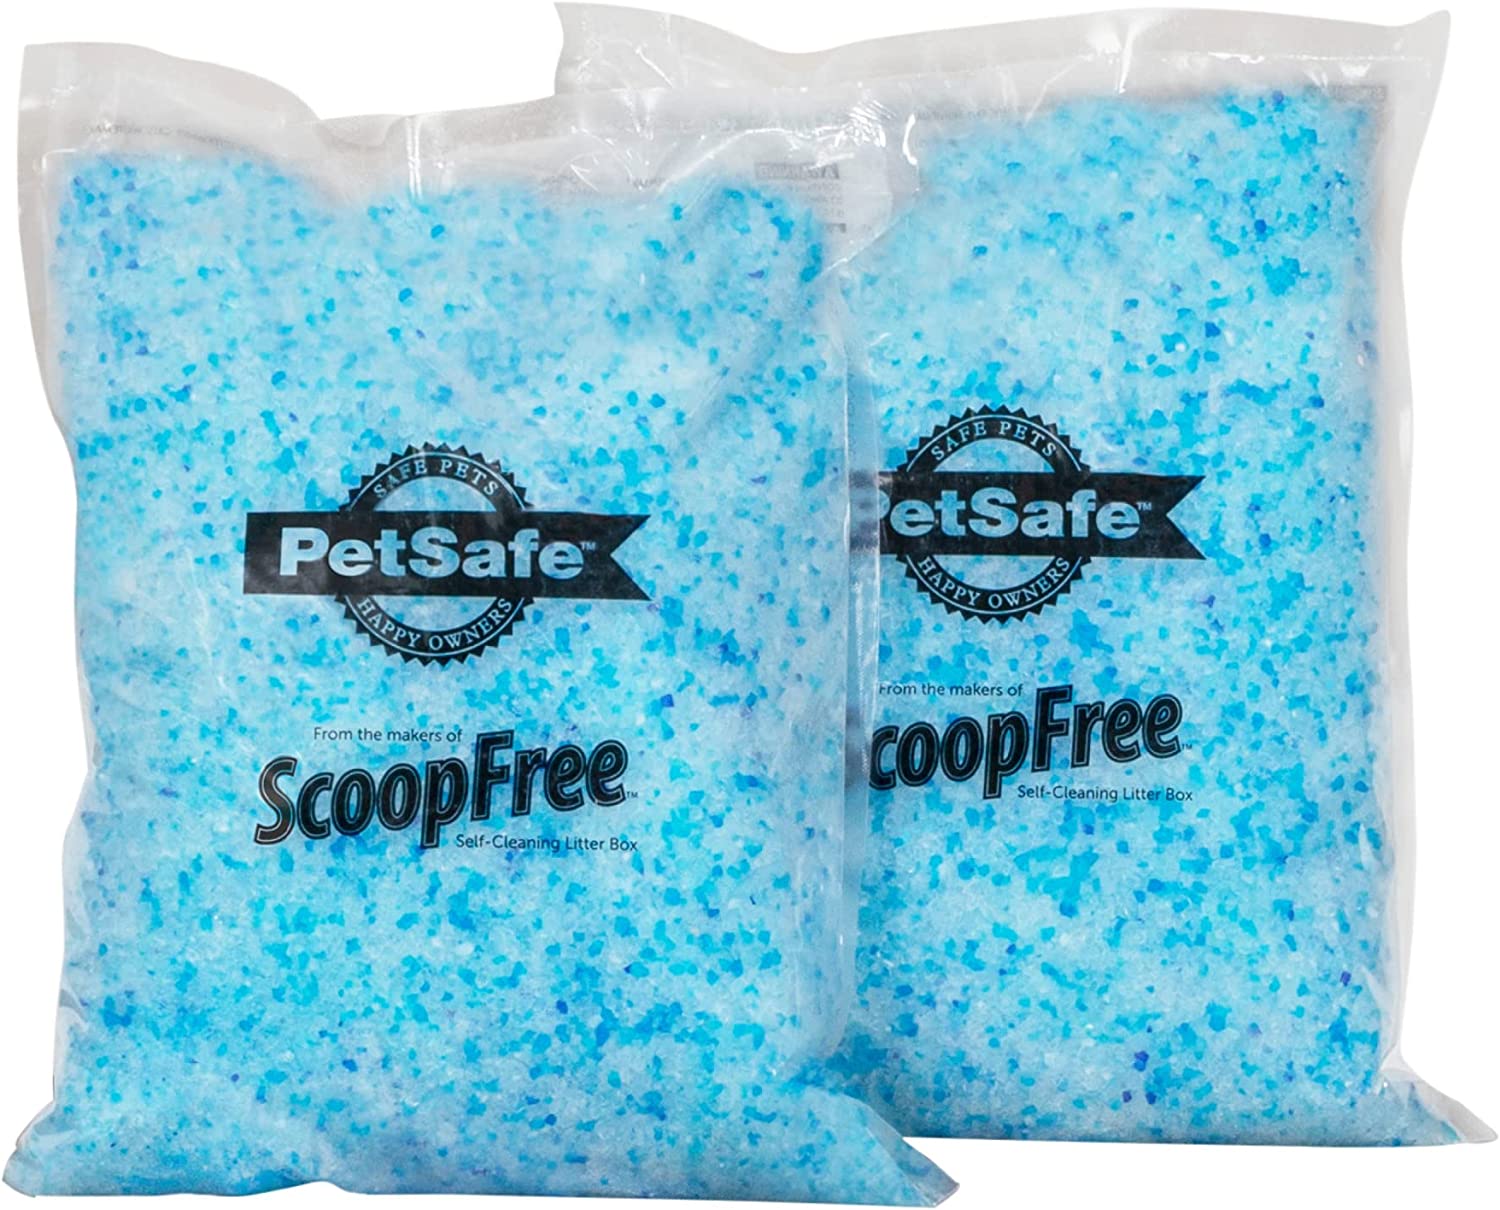 PetSafe ScoopFree Premium Blue Crystal Litter, 2-Pack